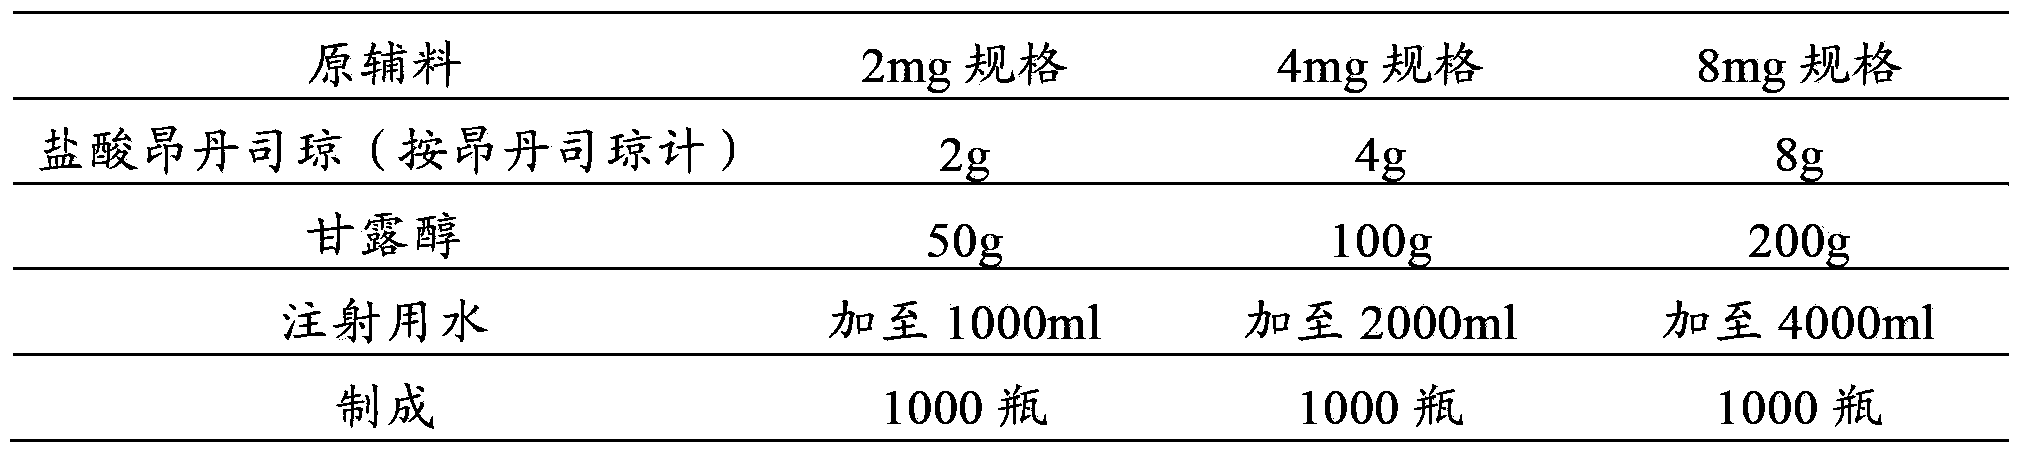 Pharmaceutical composition of ondansetron hydrochloride and dexamethasone